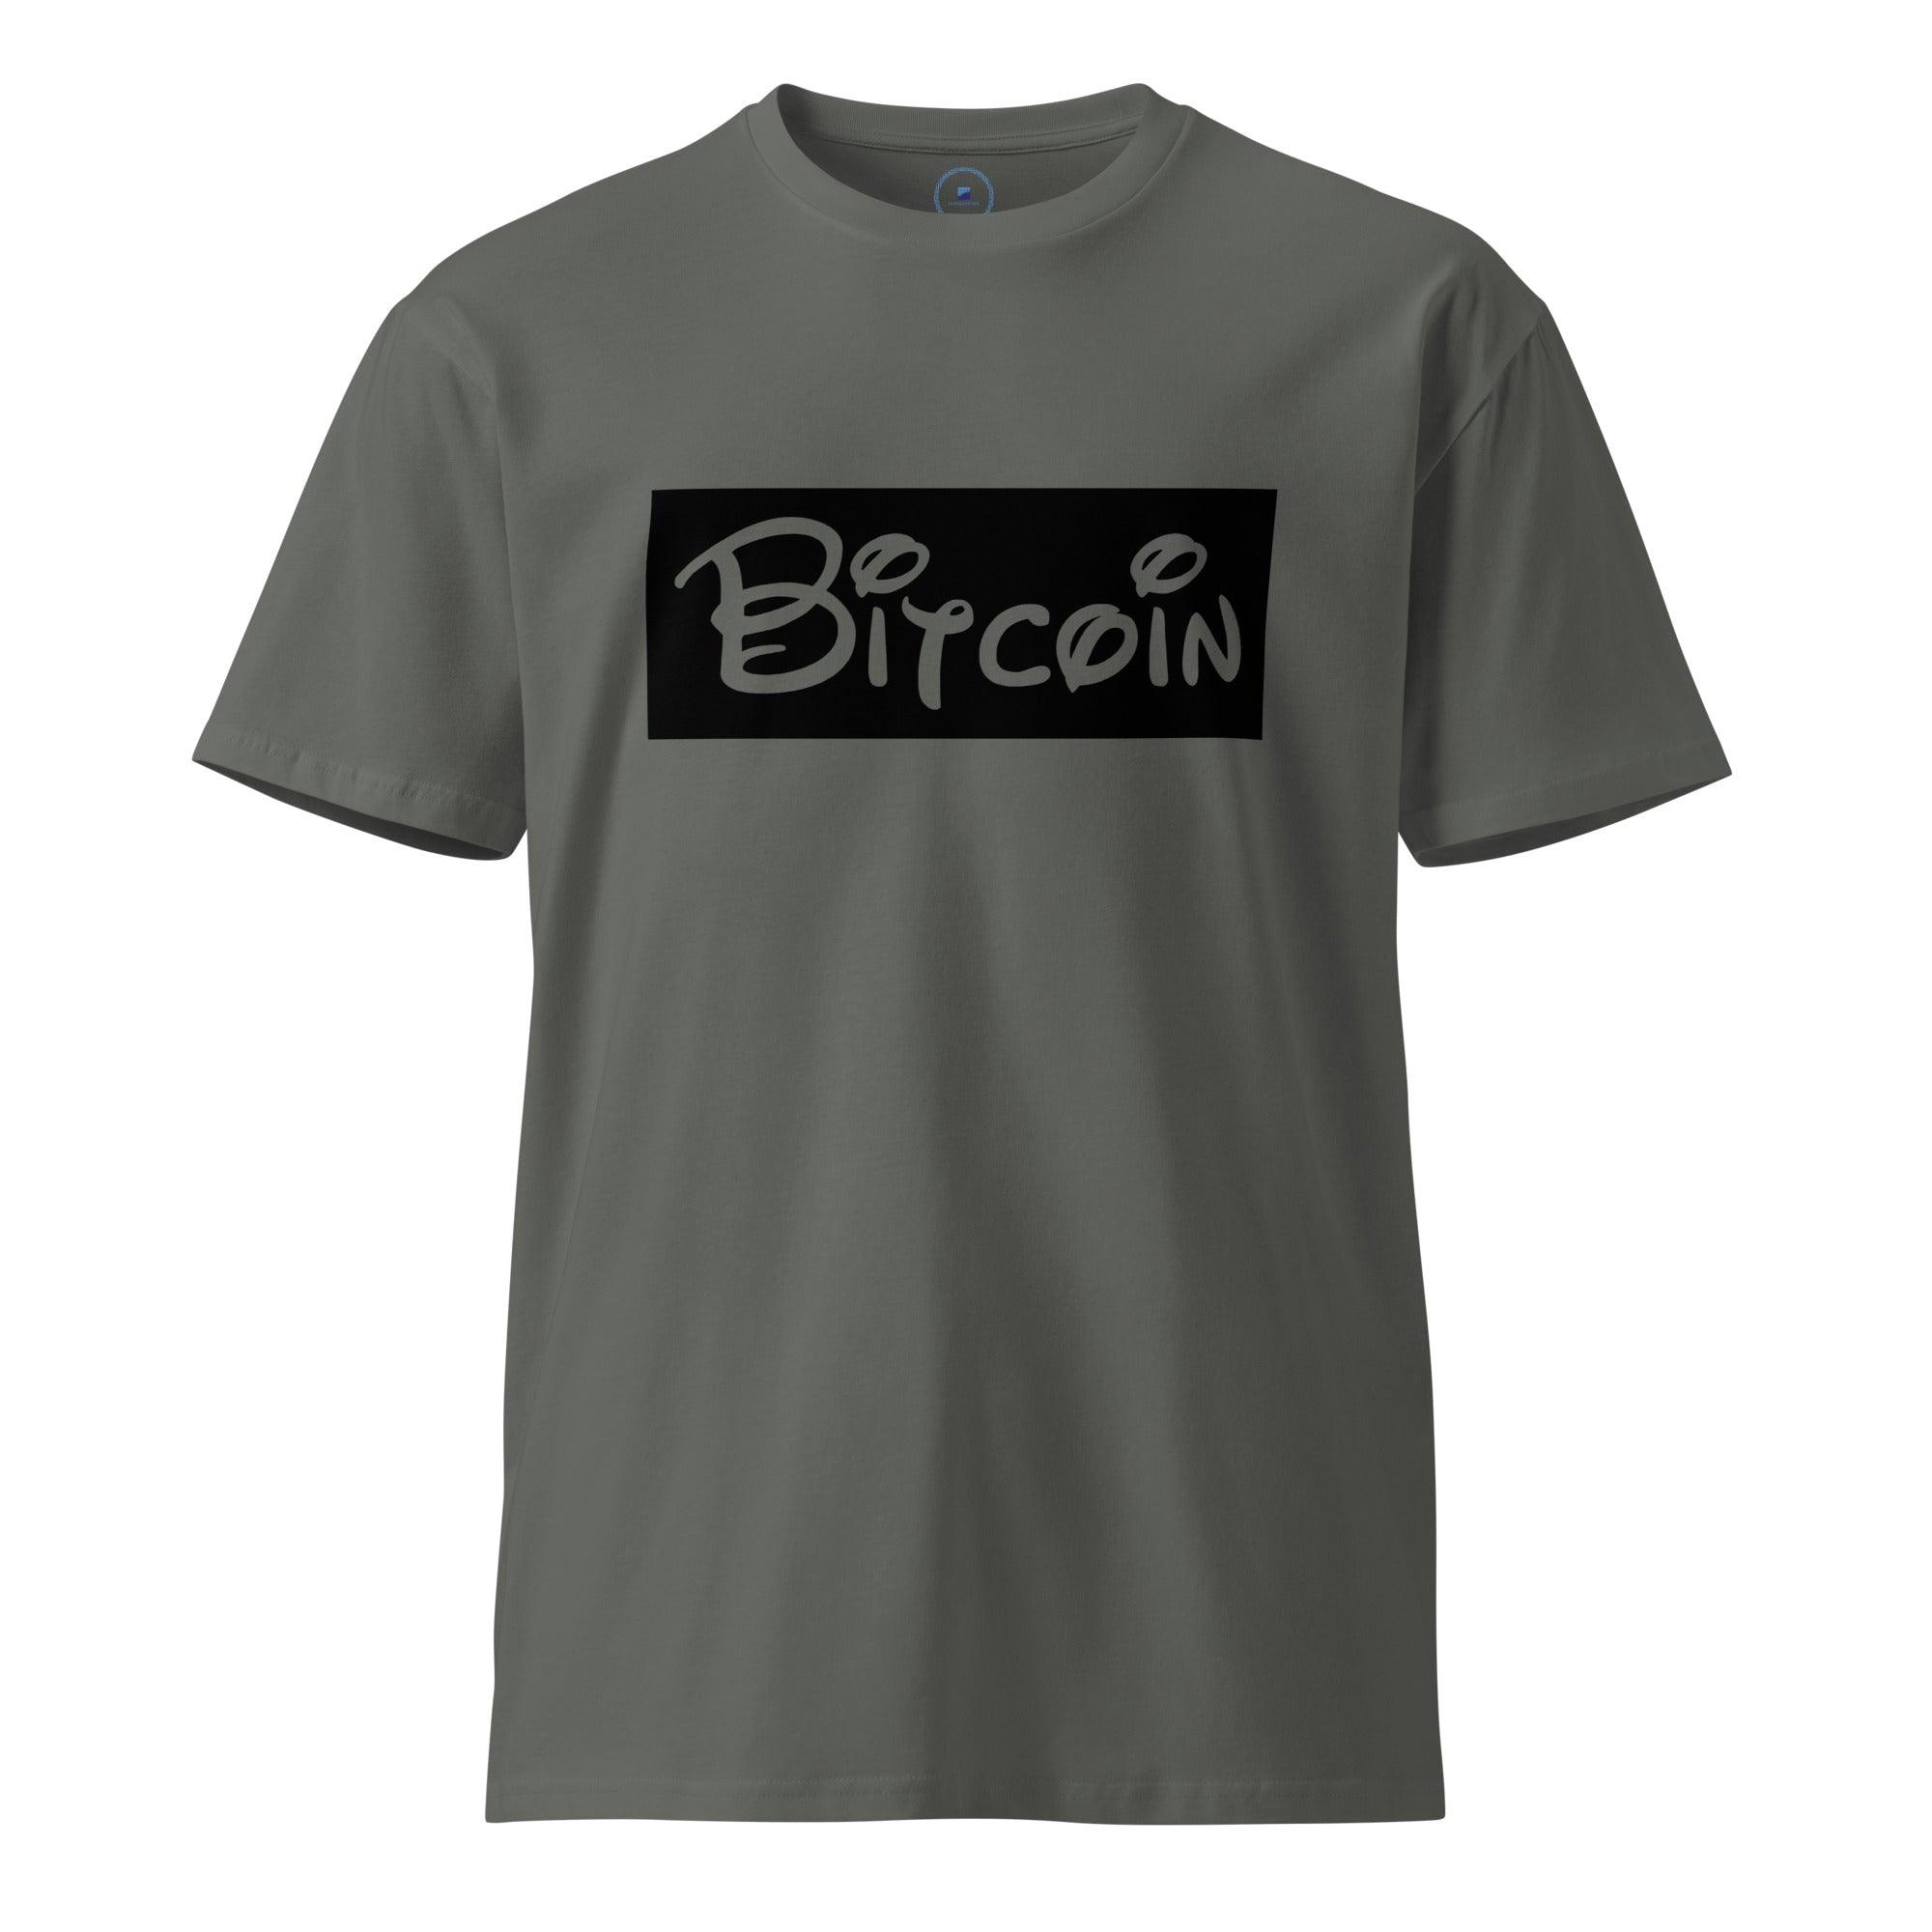 Bitcoin Character T-Shirt - InvestmenTees